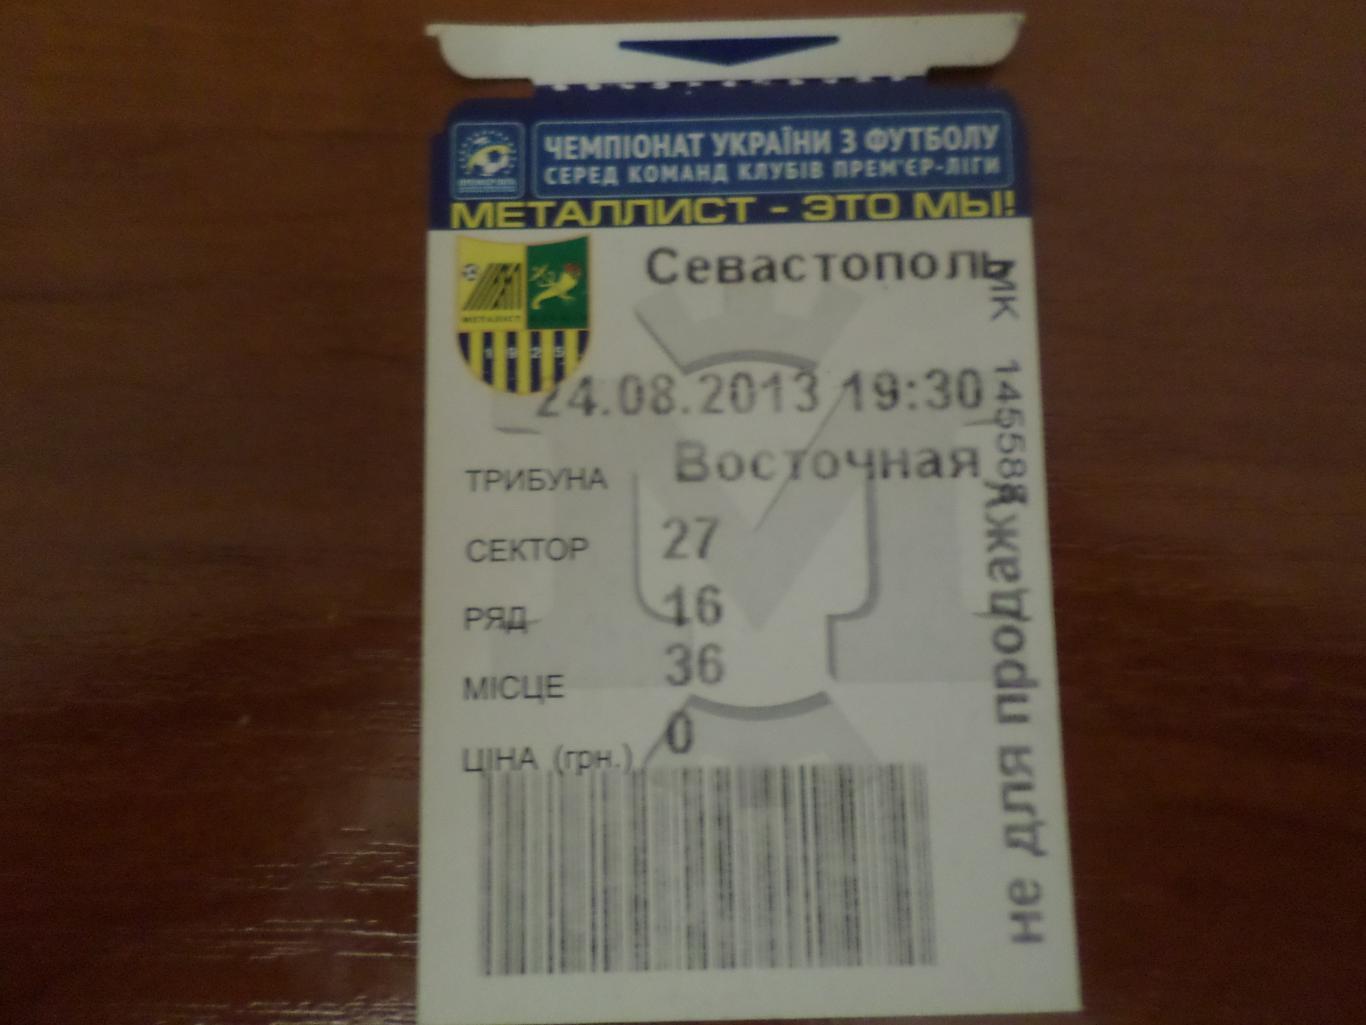 Билет к матчу Металлист Харьков - Севастополь 2013-2014